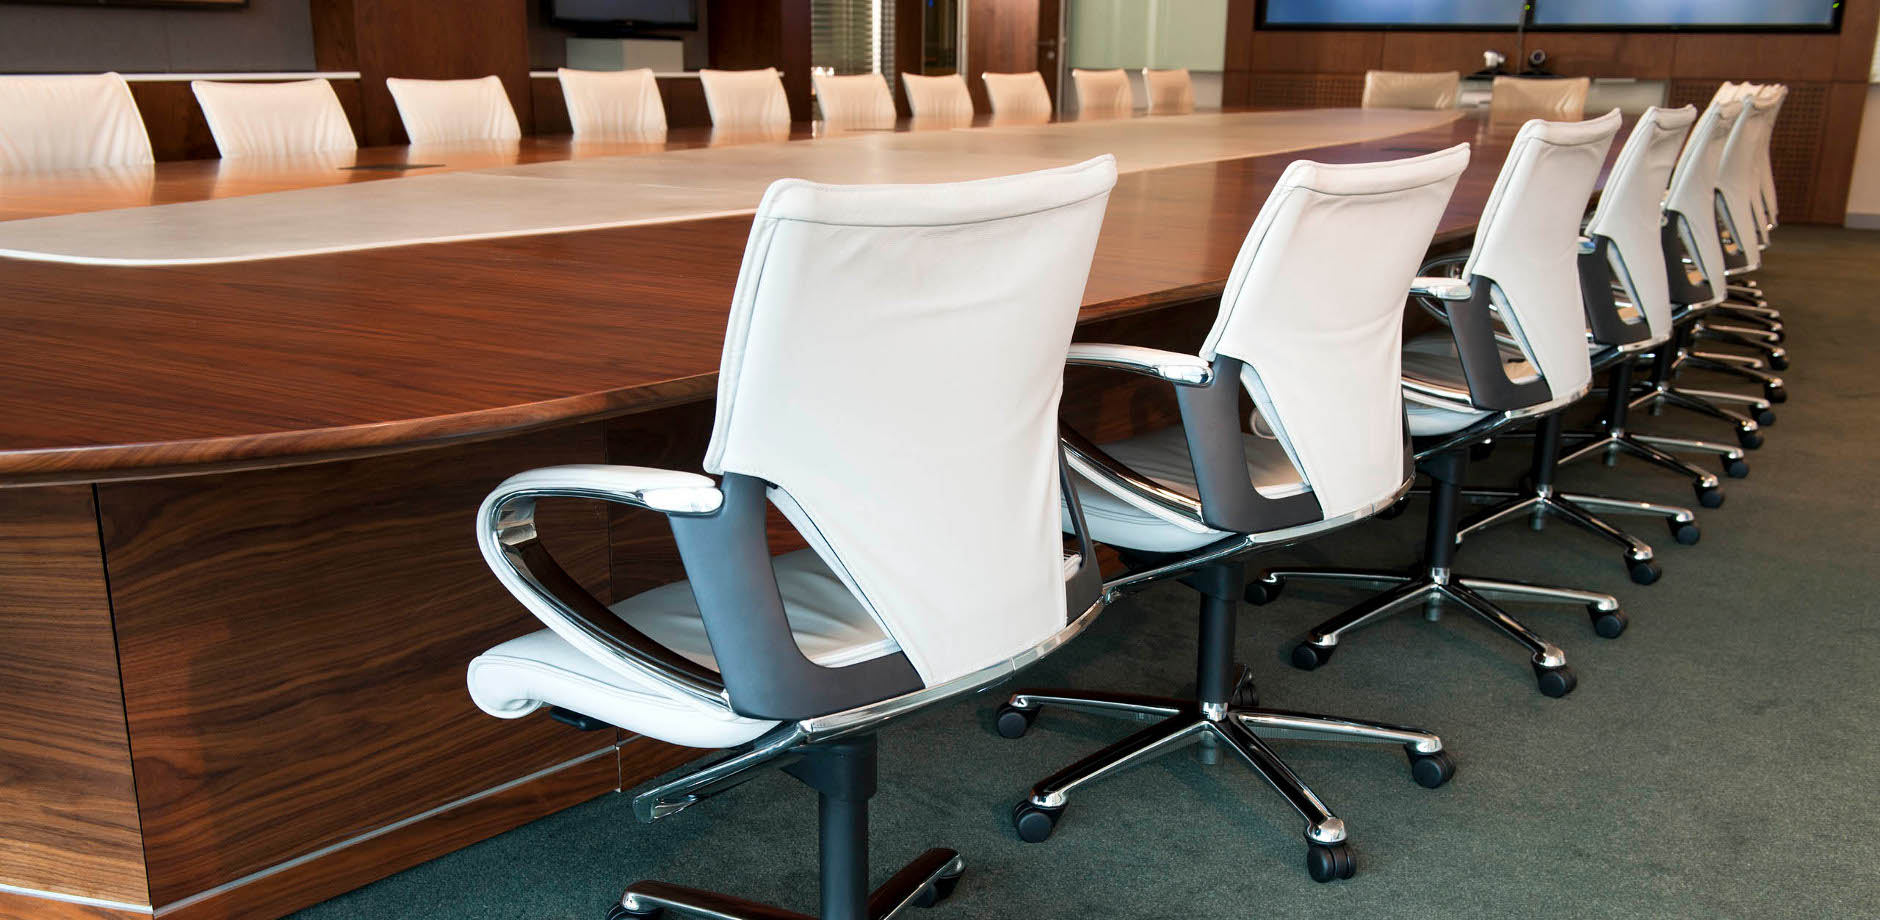 Conference room / Boardroom Reference - Standard Bank